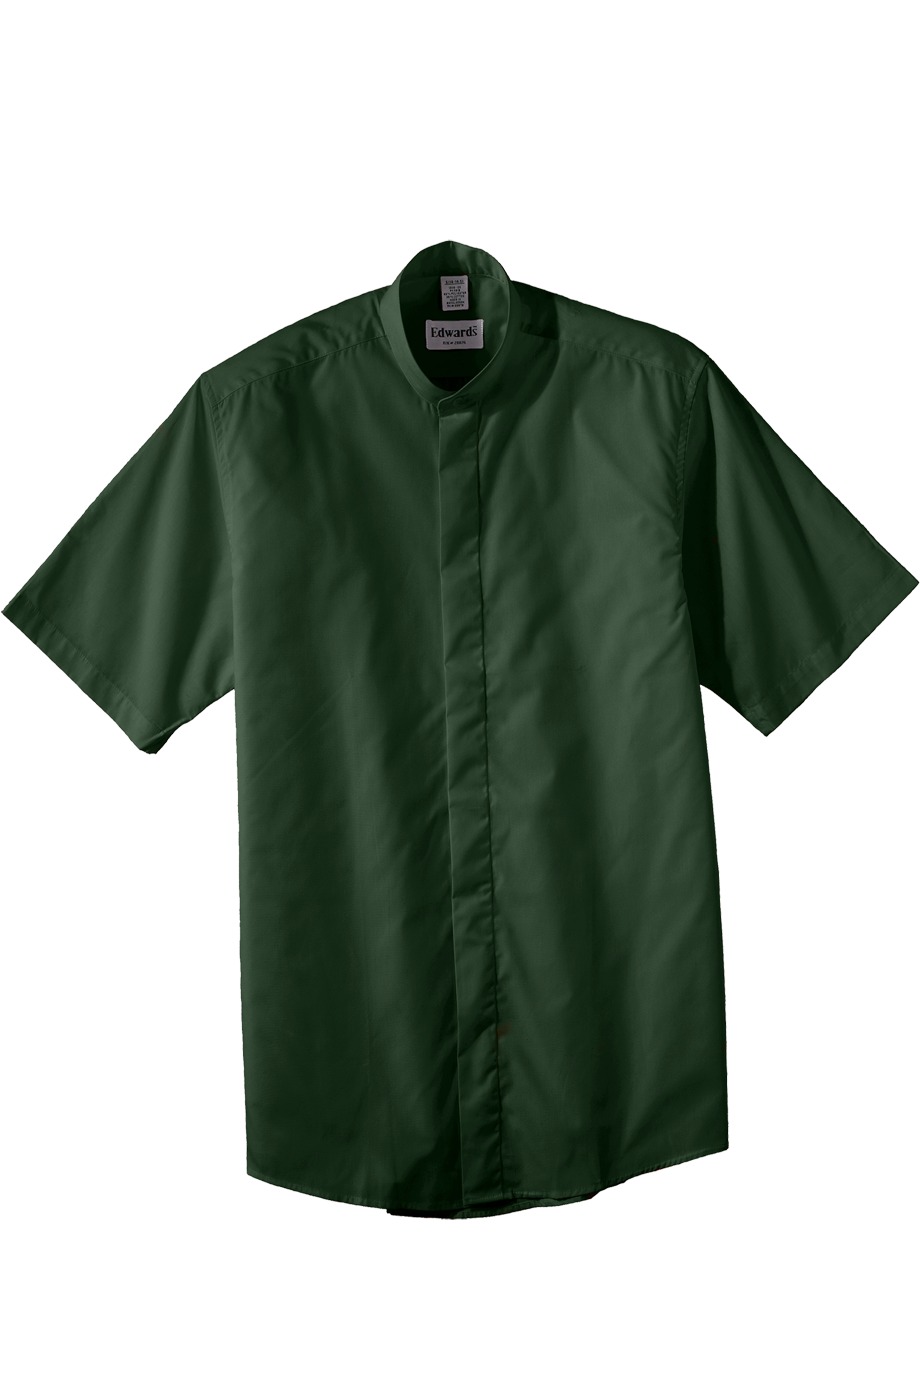 Edwards Garment 1346 - Men's Short Sleeve Banded Collar Shirt